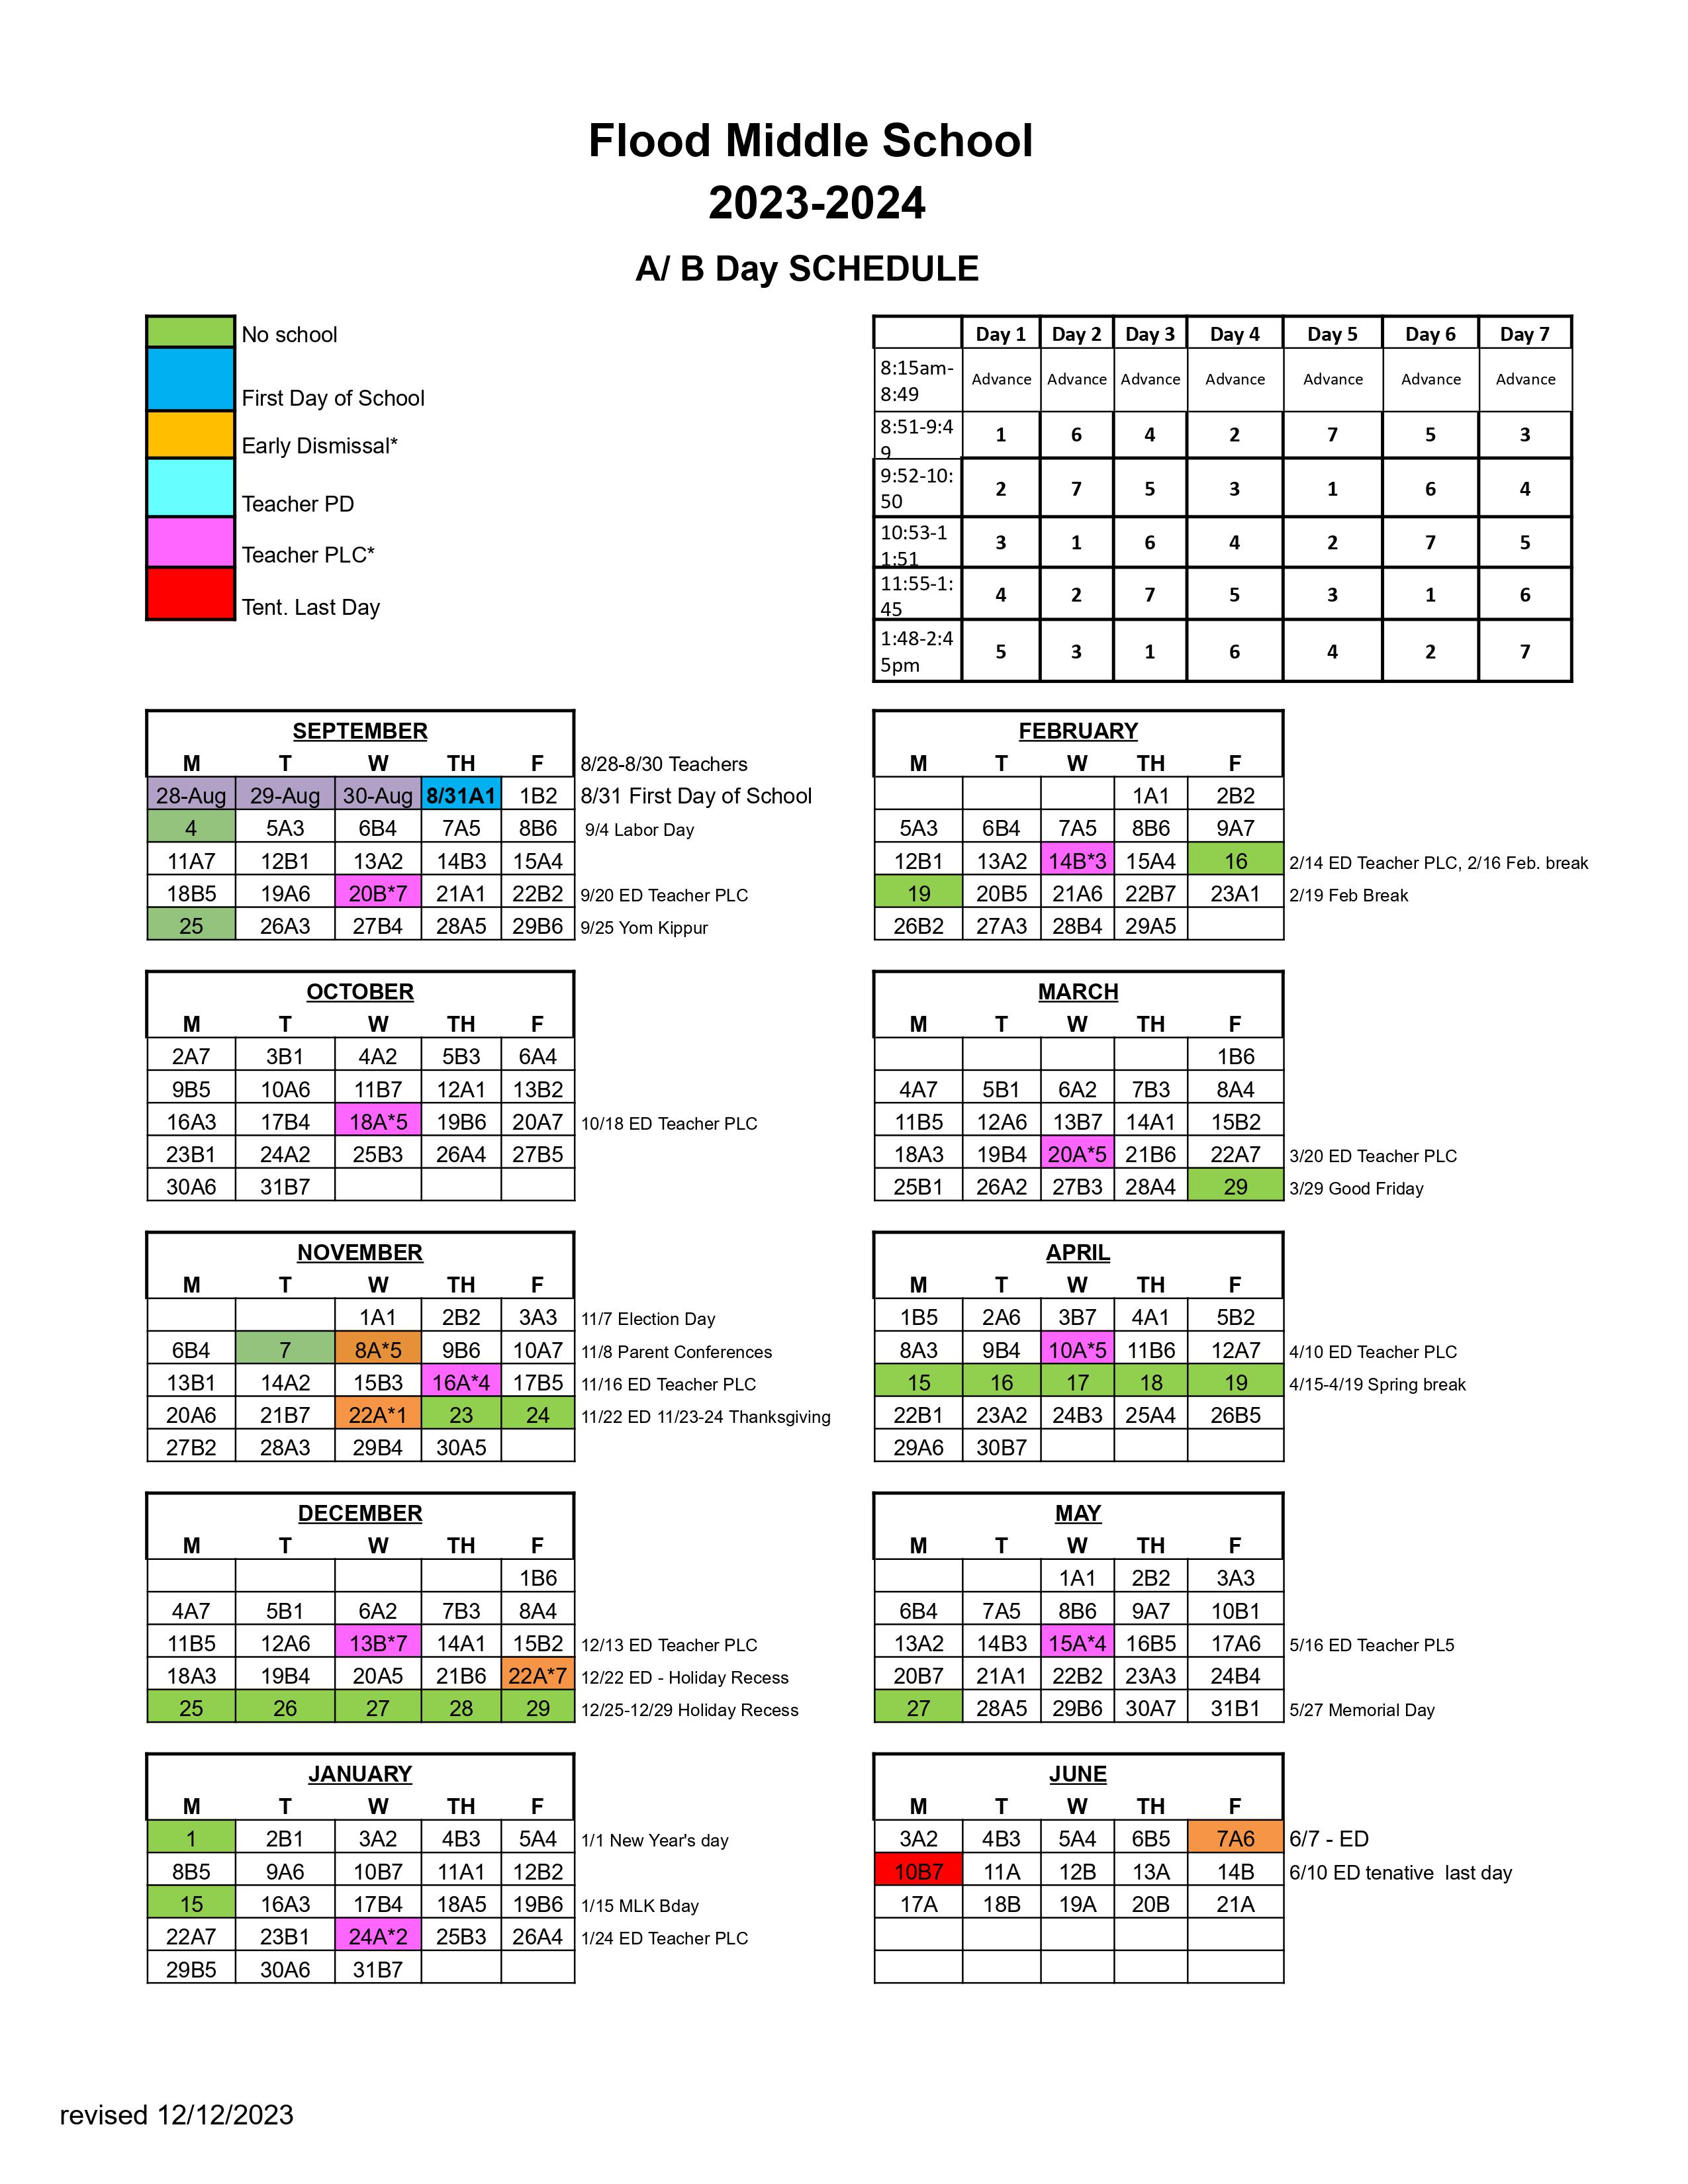 AB calendar 23-24